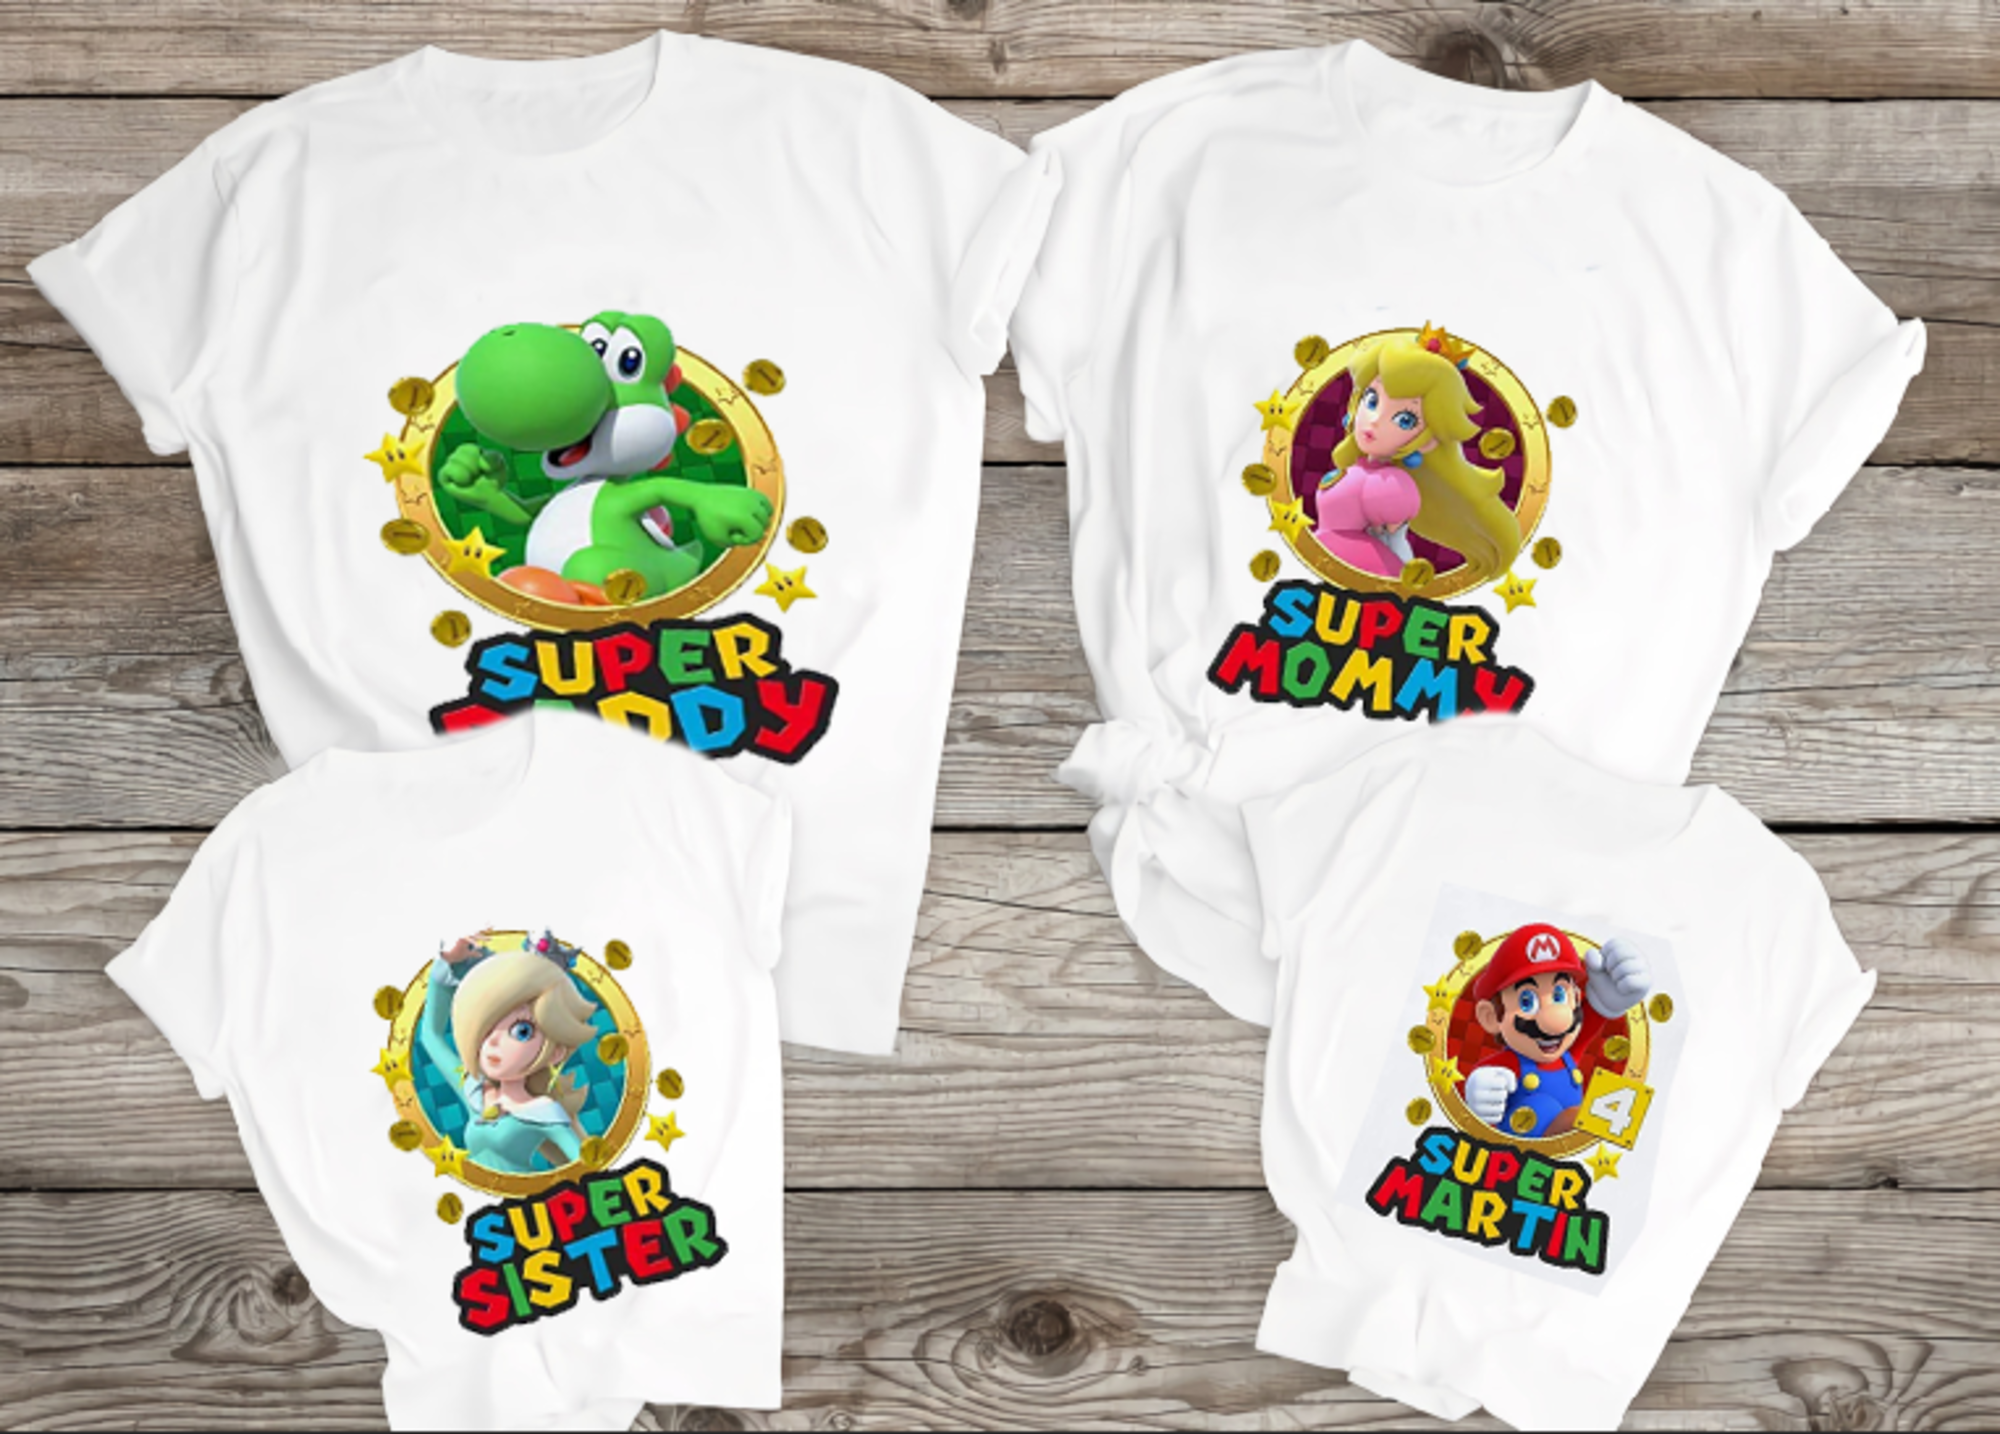 Customized Super Mario birthday shirt, Super Mario family shirts, Super Mario theme party shirts, Super Mario matching shirts, Super Mario tshirt